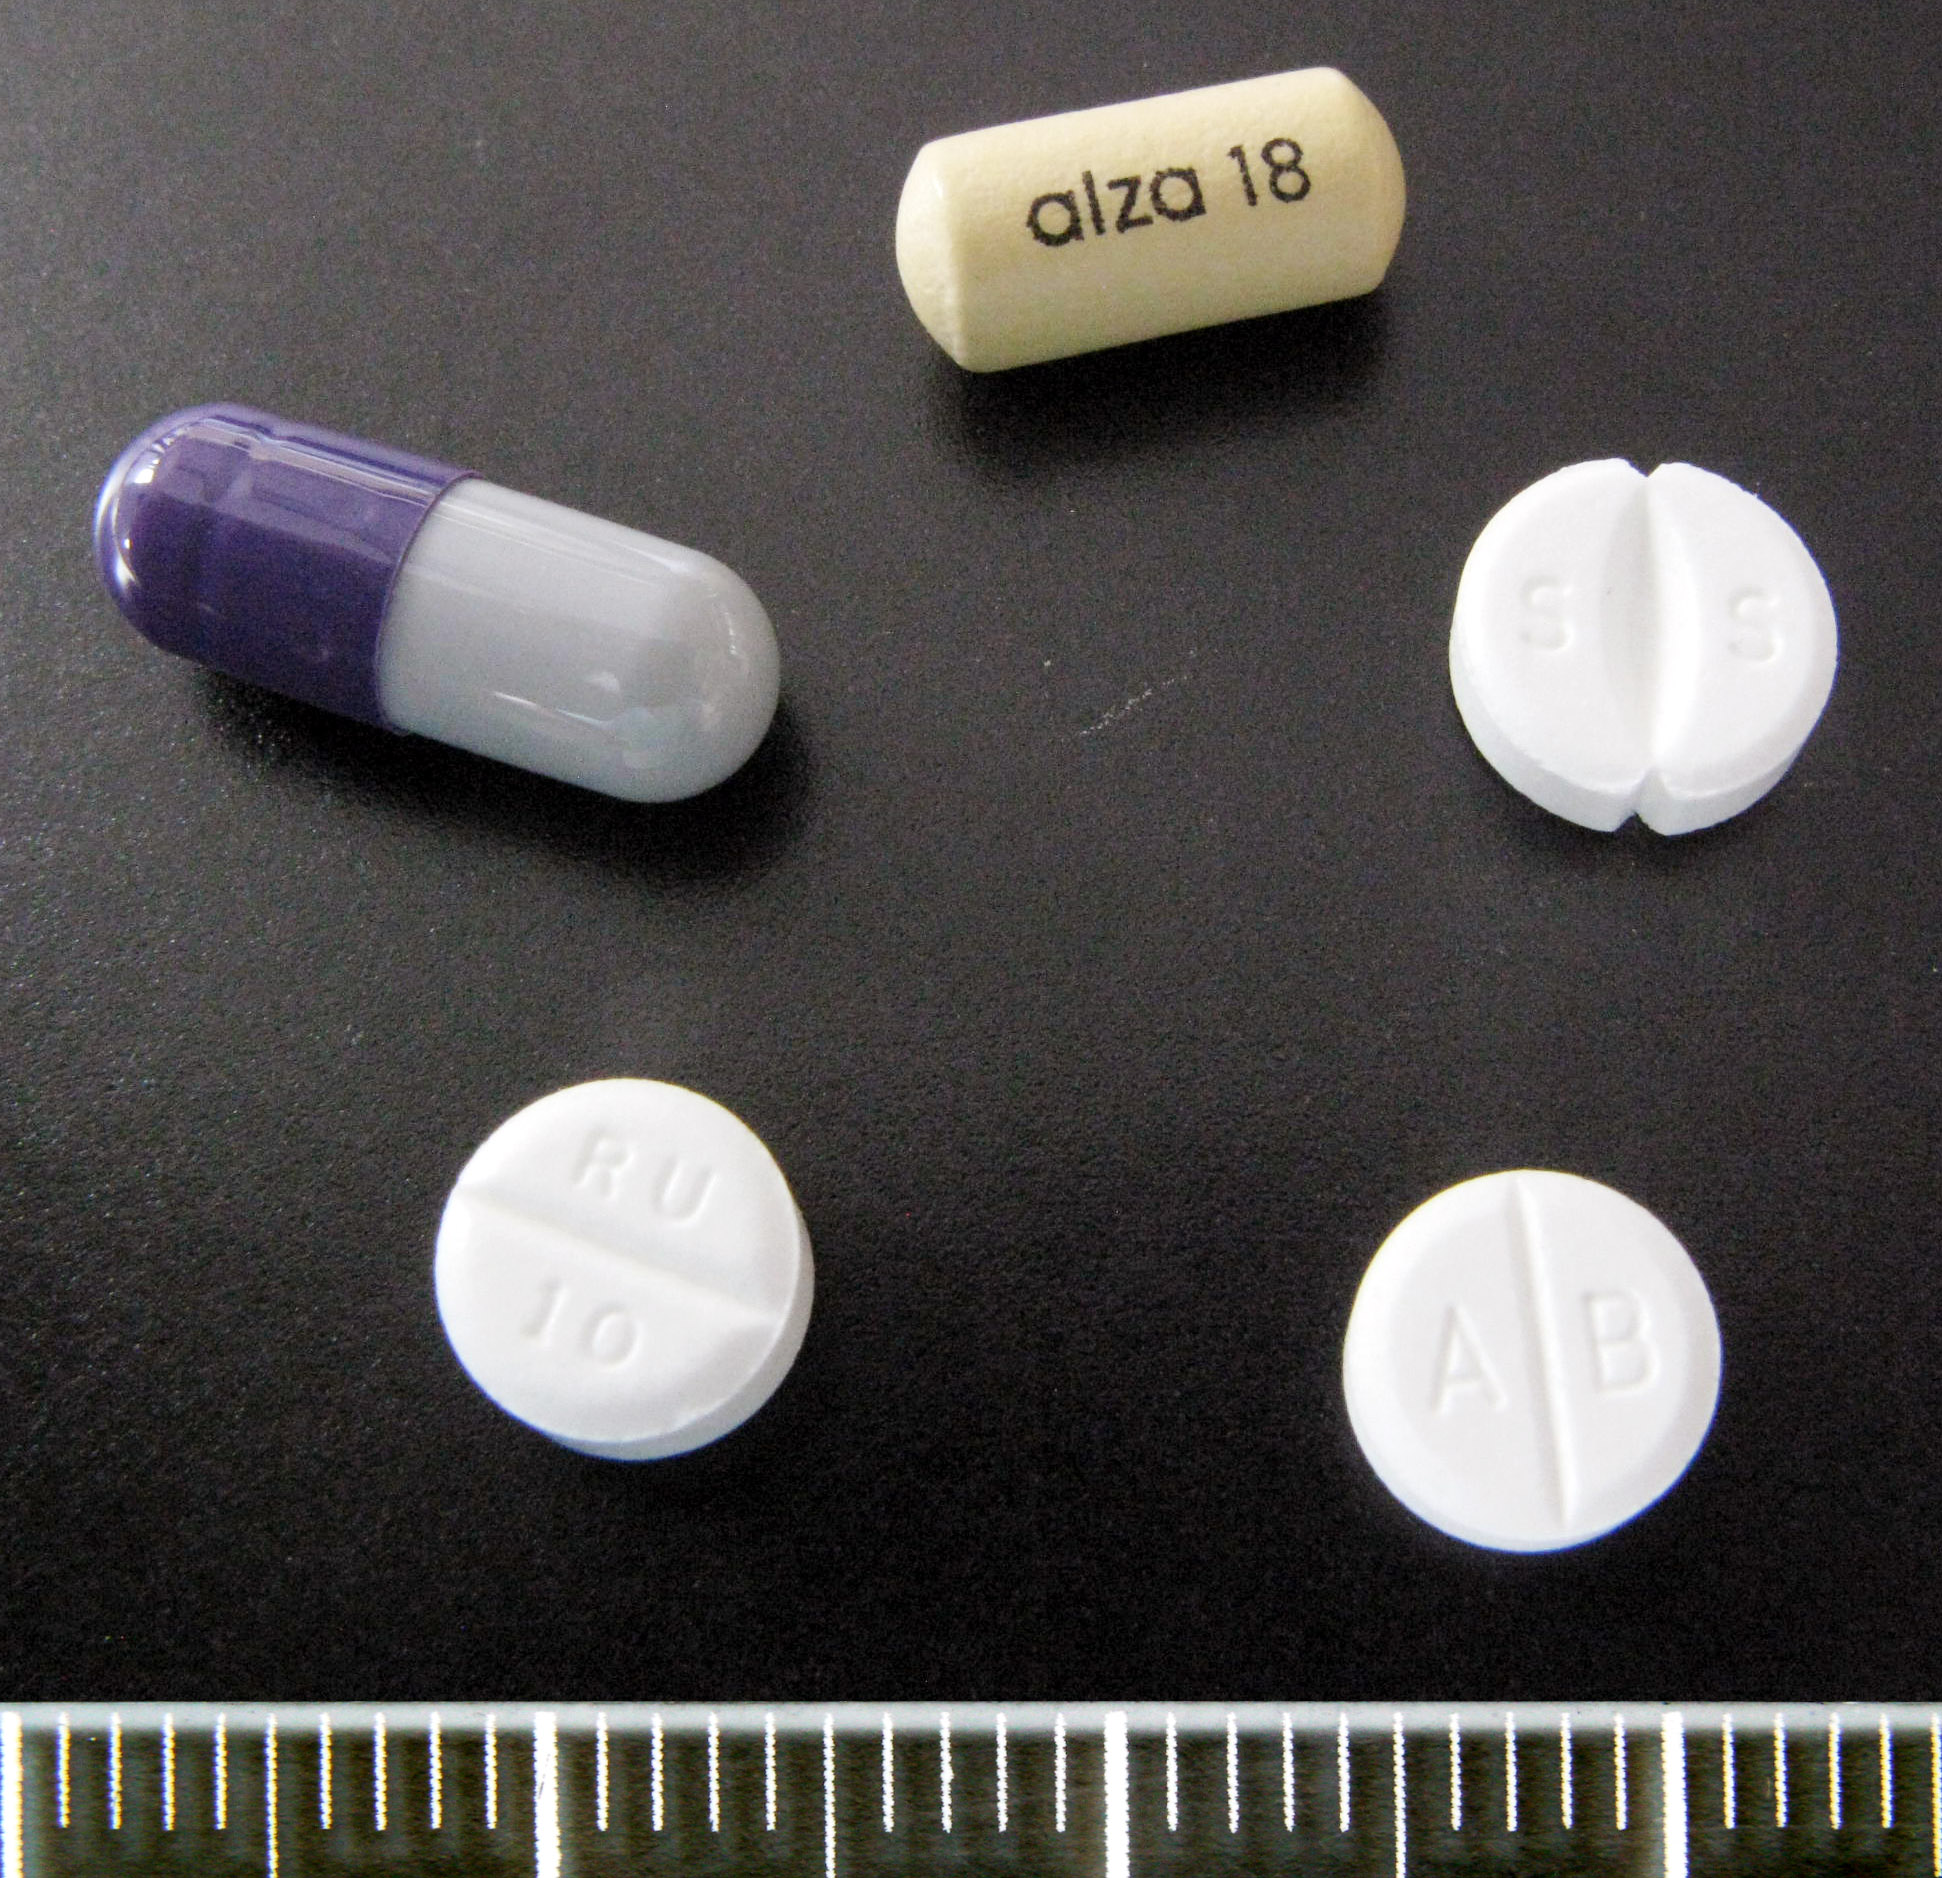 methylphenidate capsules